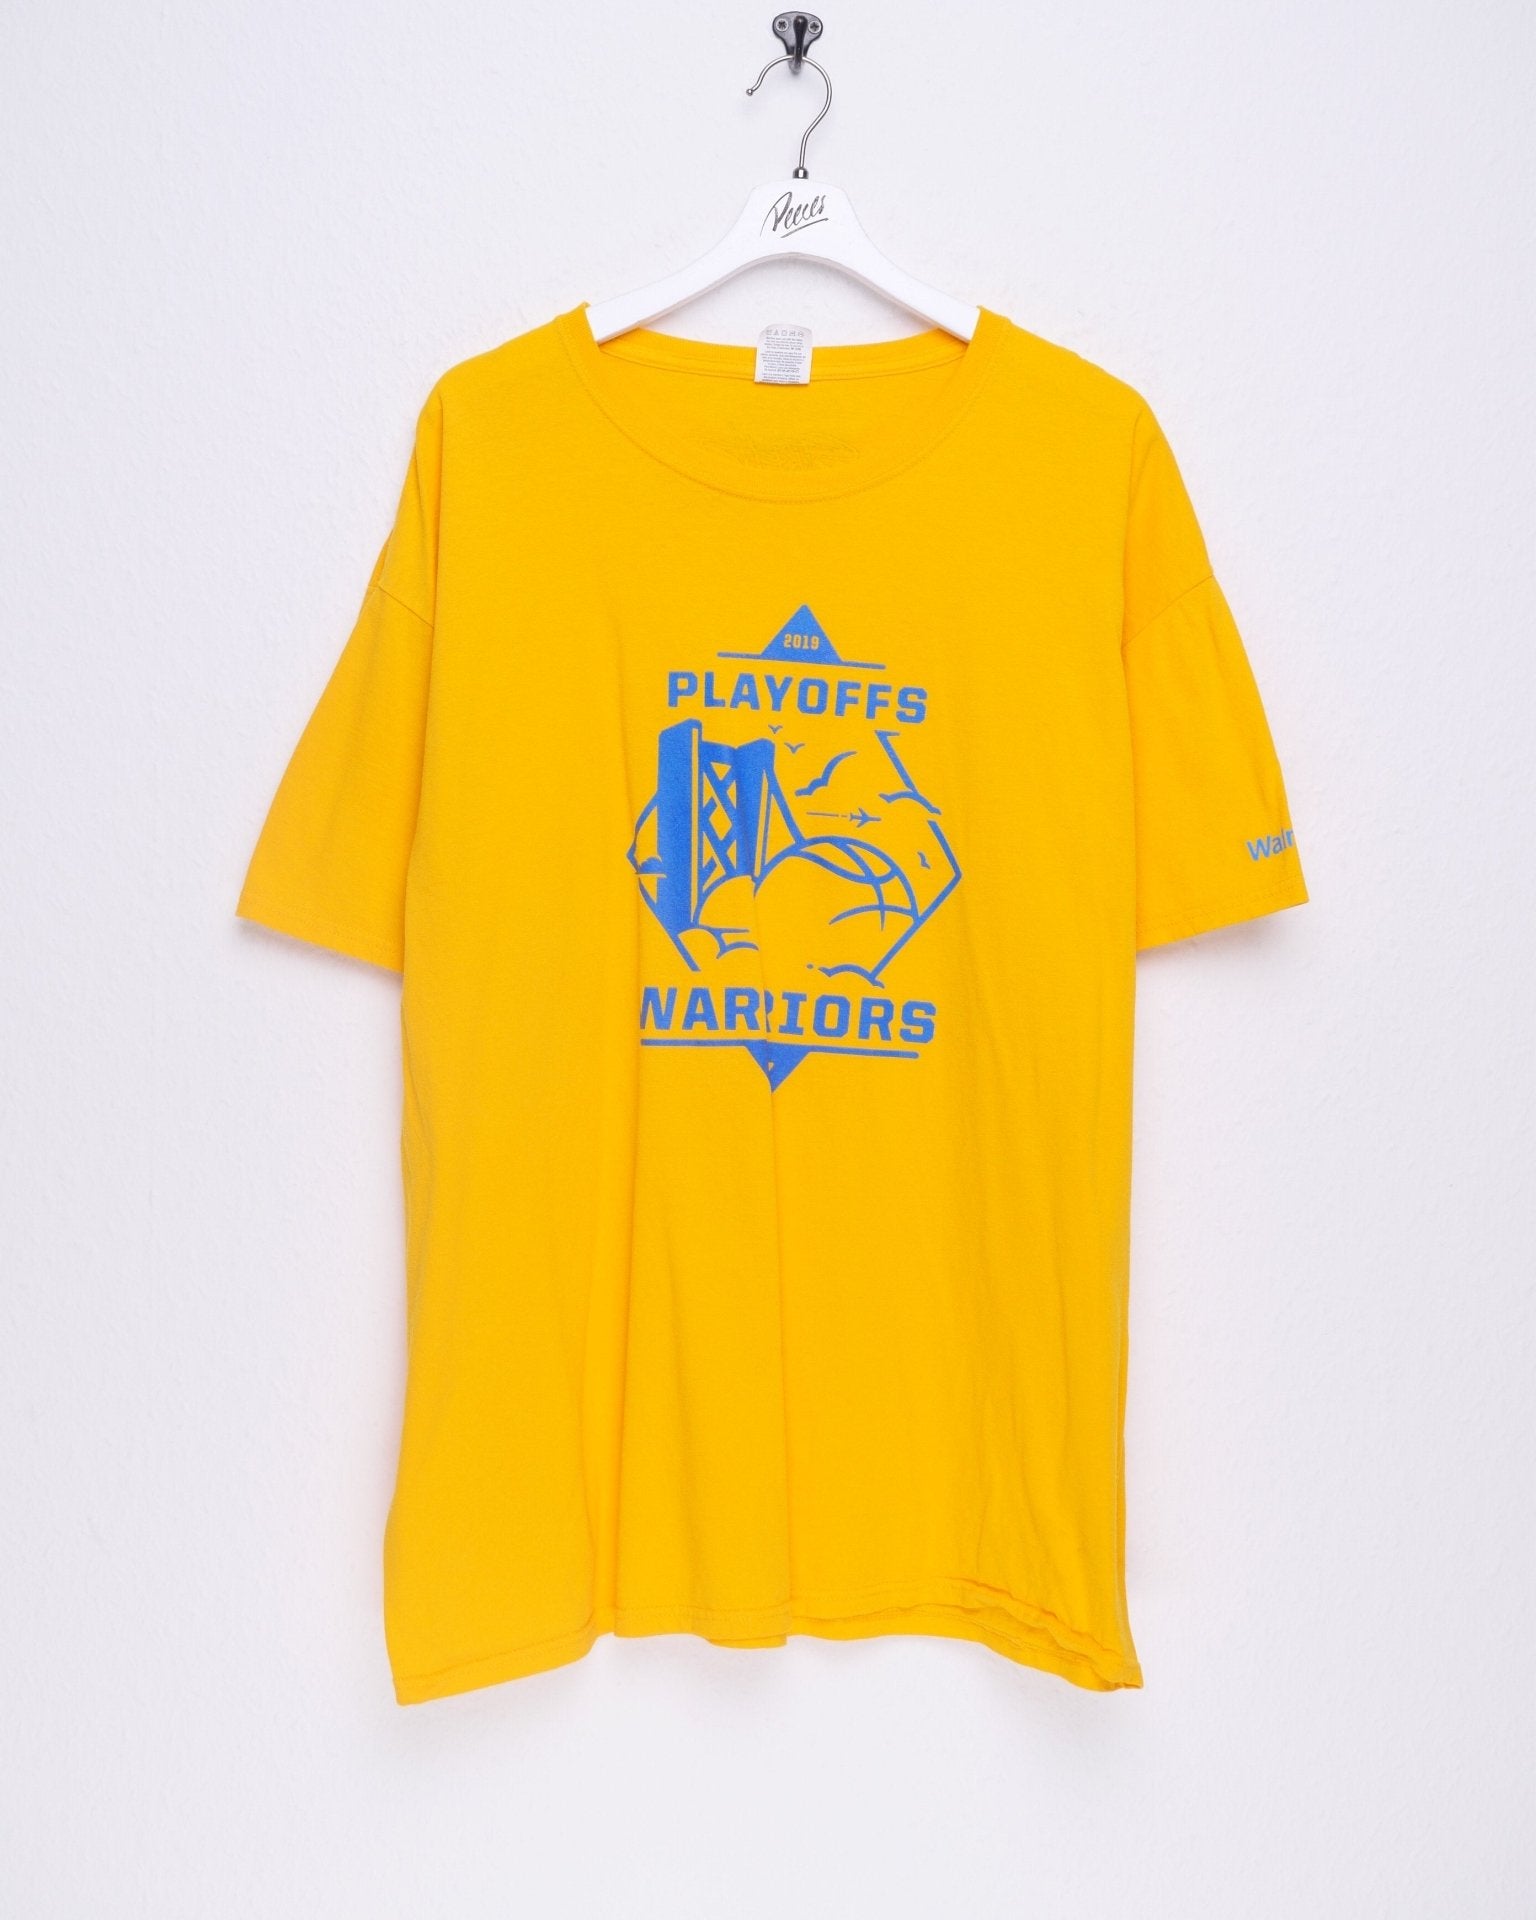 fruit printed Logo 'Playoffs 2019' yellow Shirt - Peeces